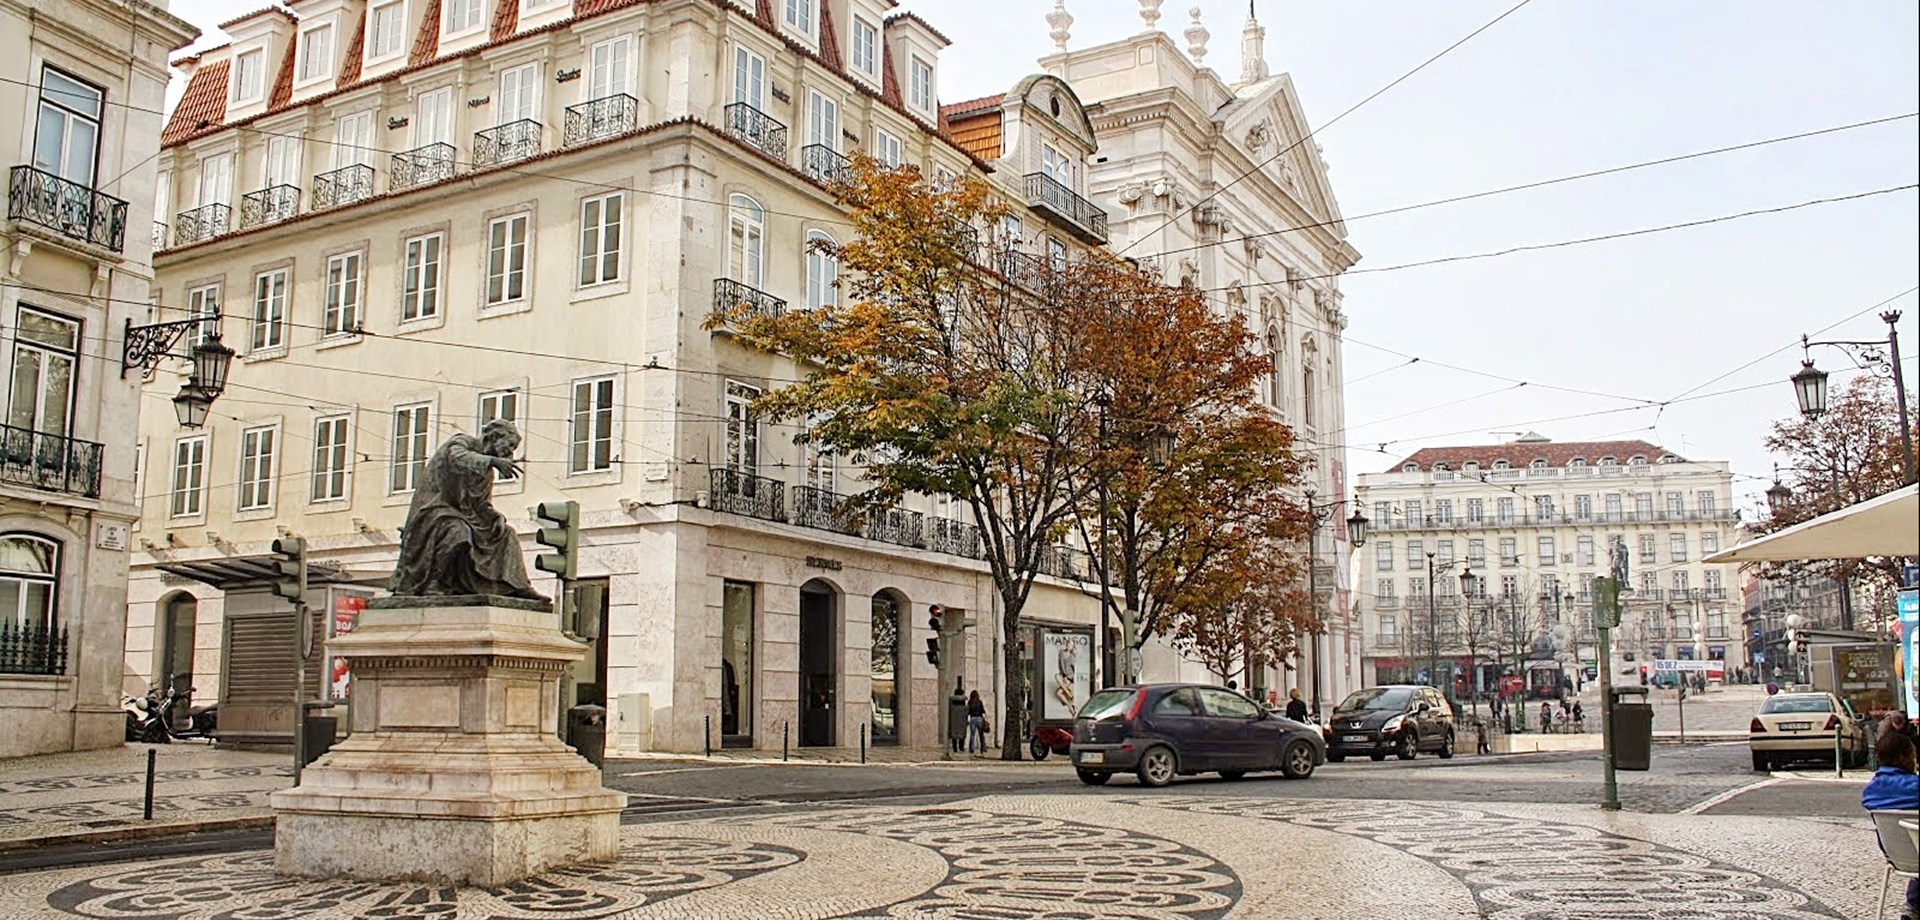 História da Calçada Portuguesa